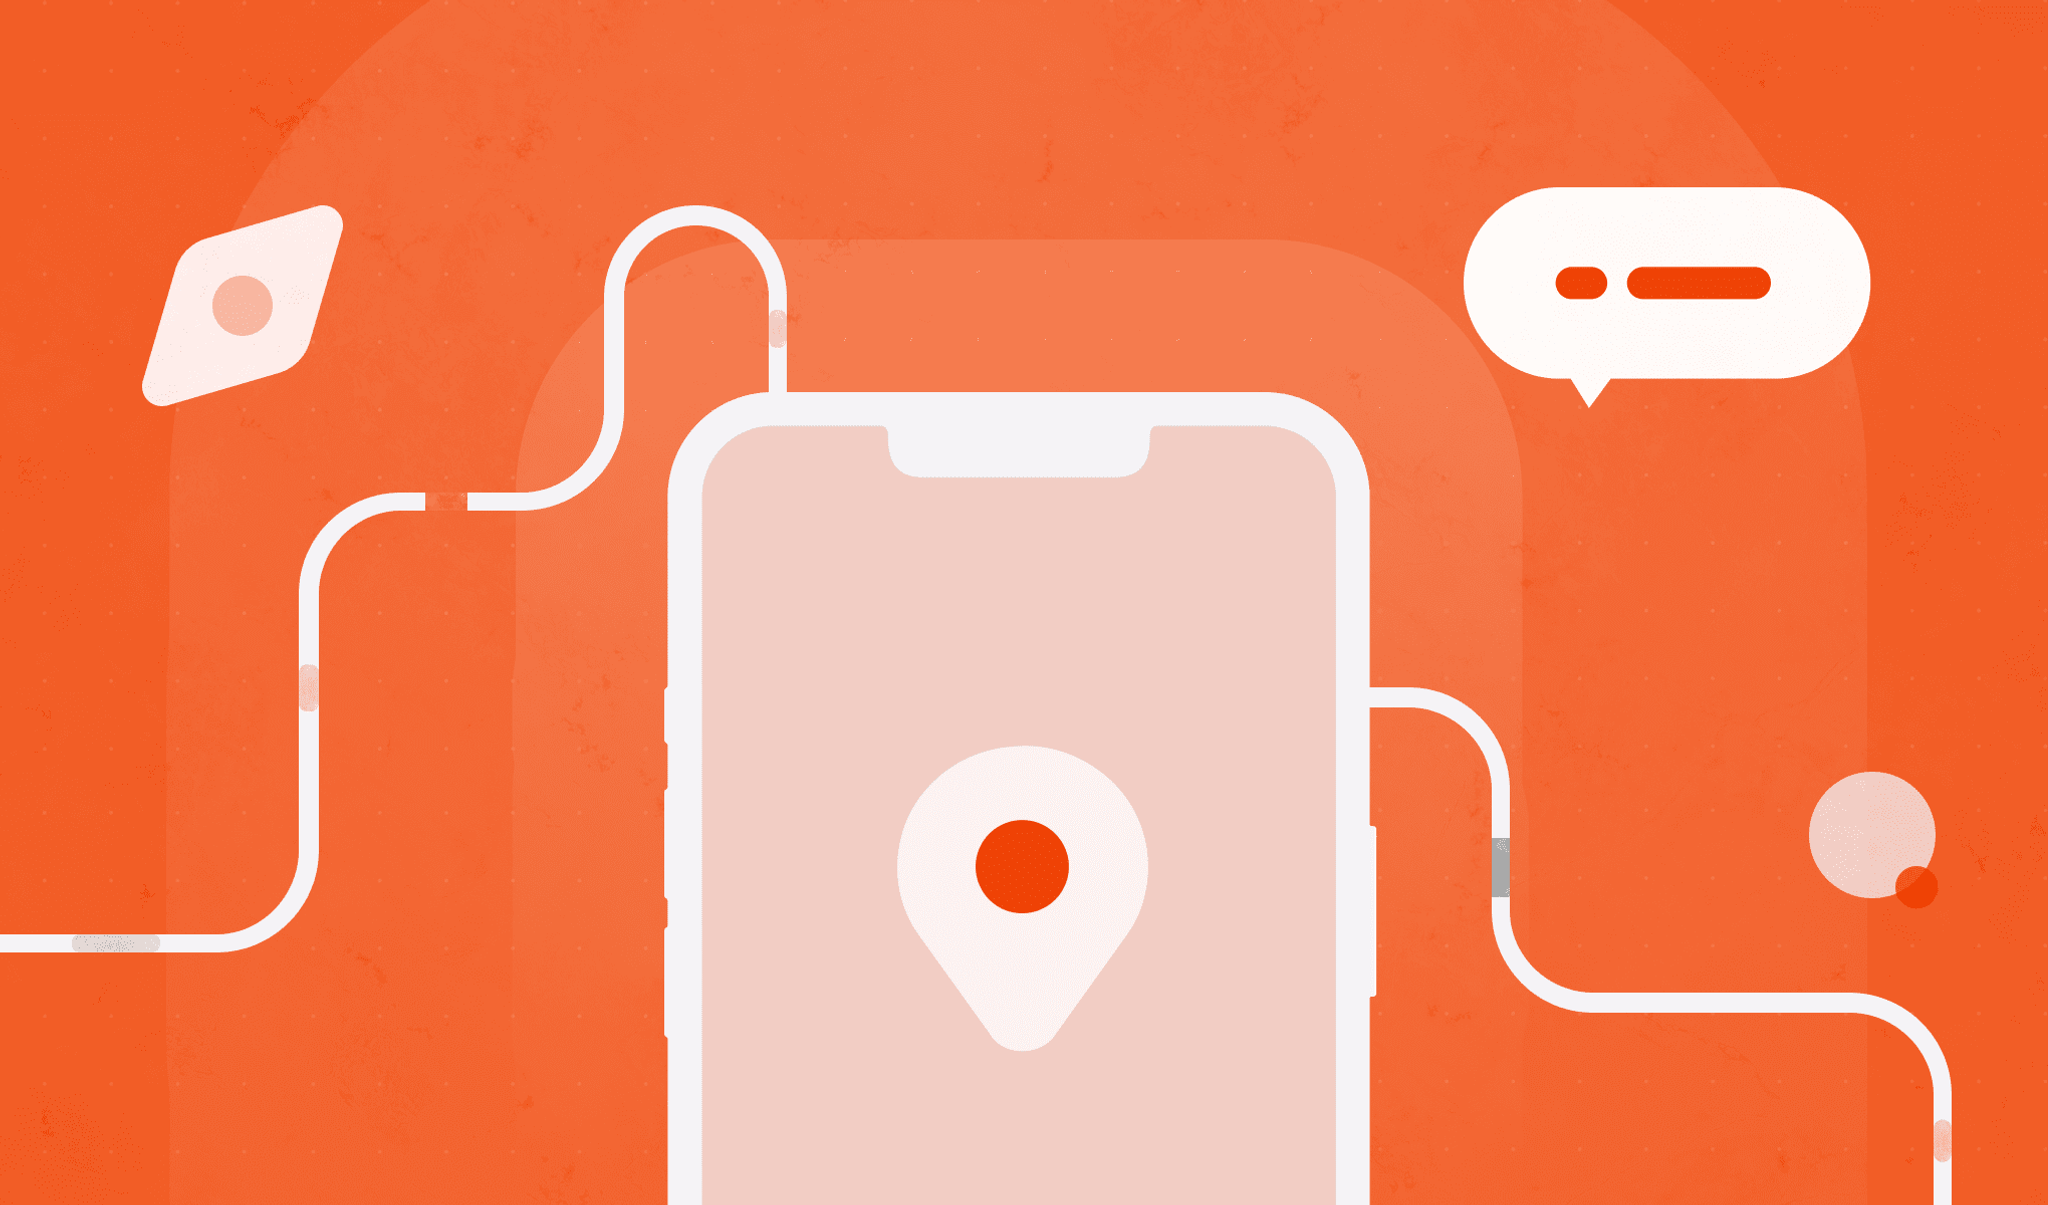 illustration of a phone on an orange background